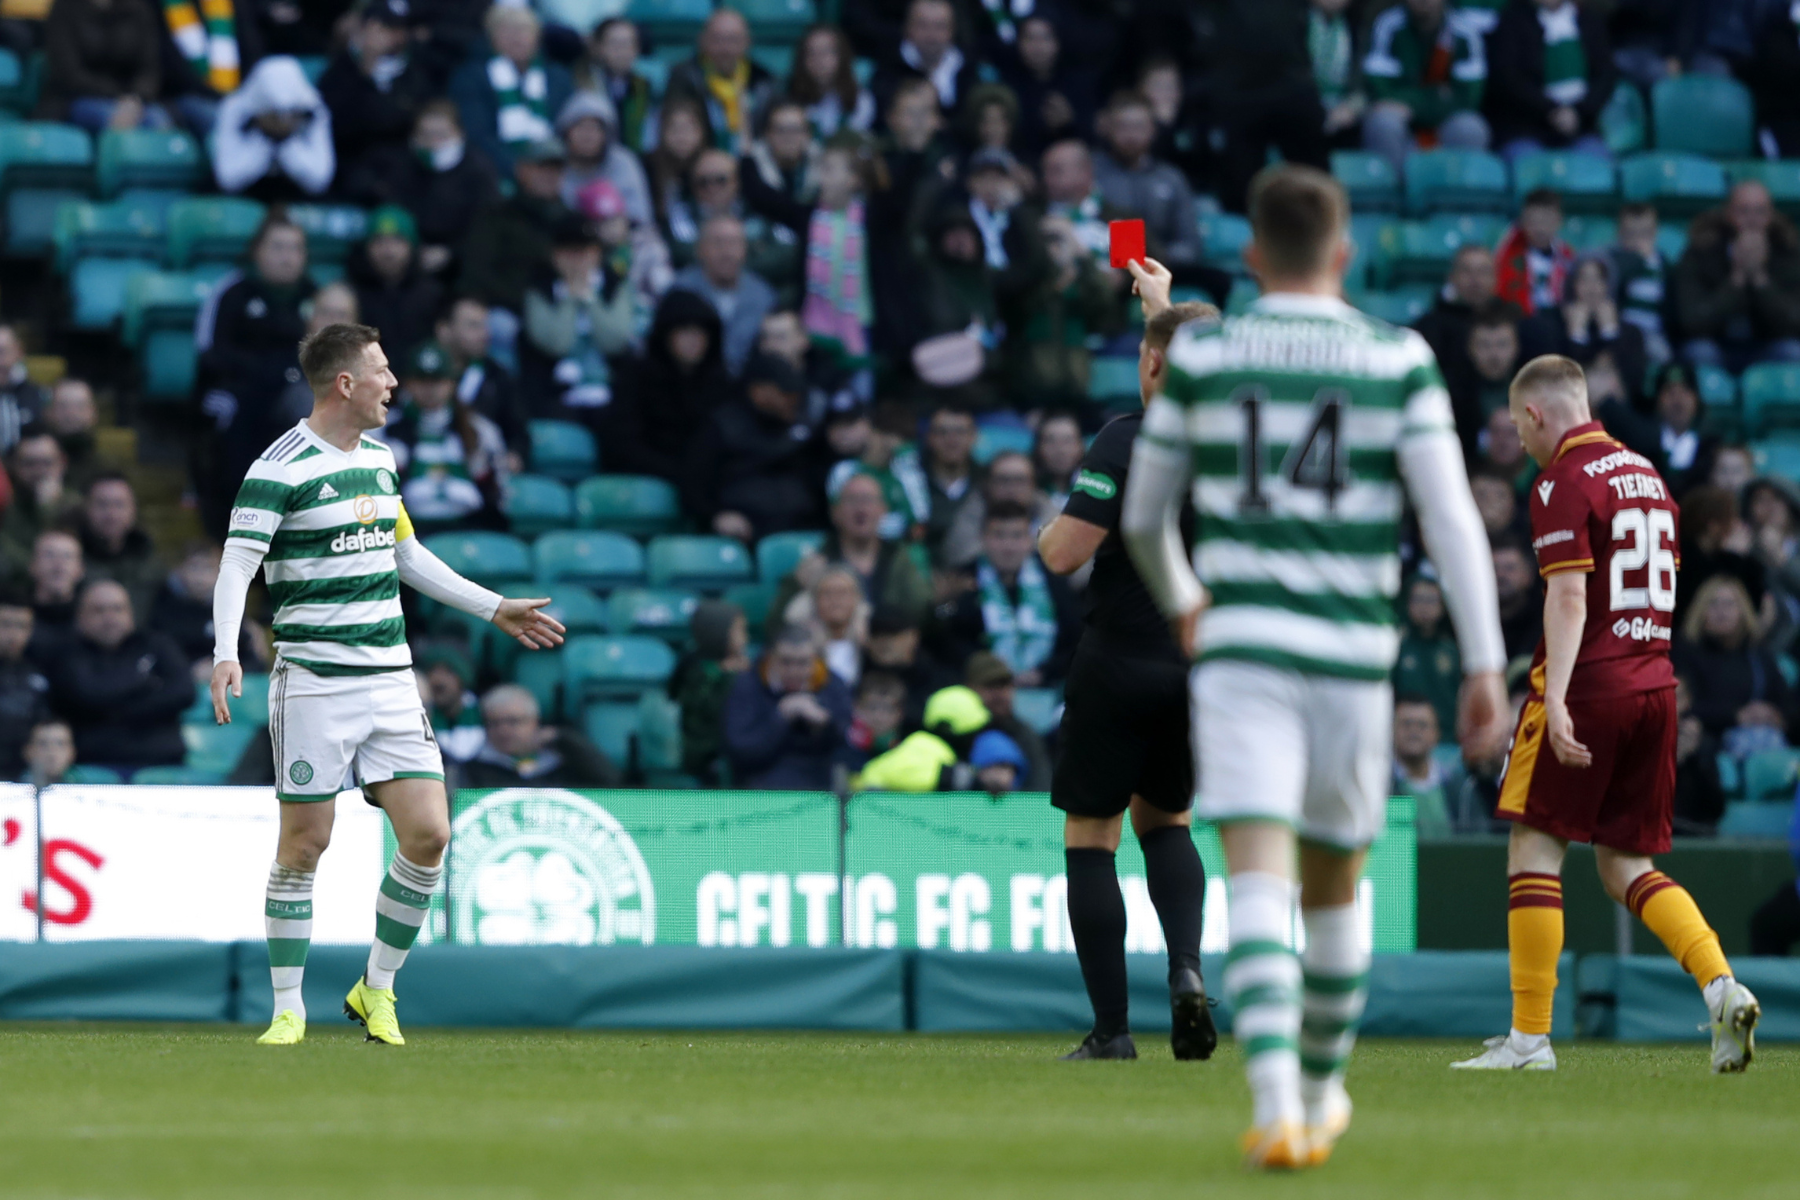 Callum McGregor Celtic red card decision analysed by ex-Premier League ref